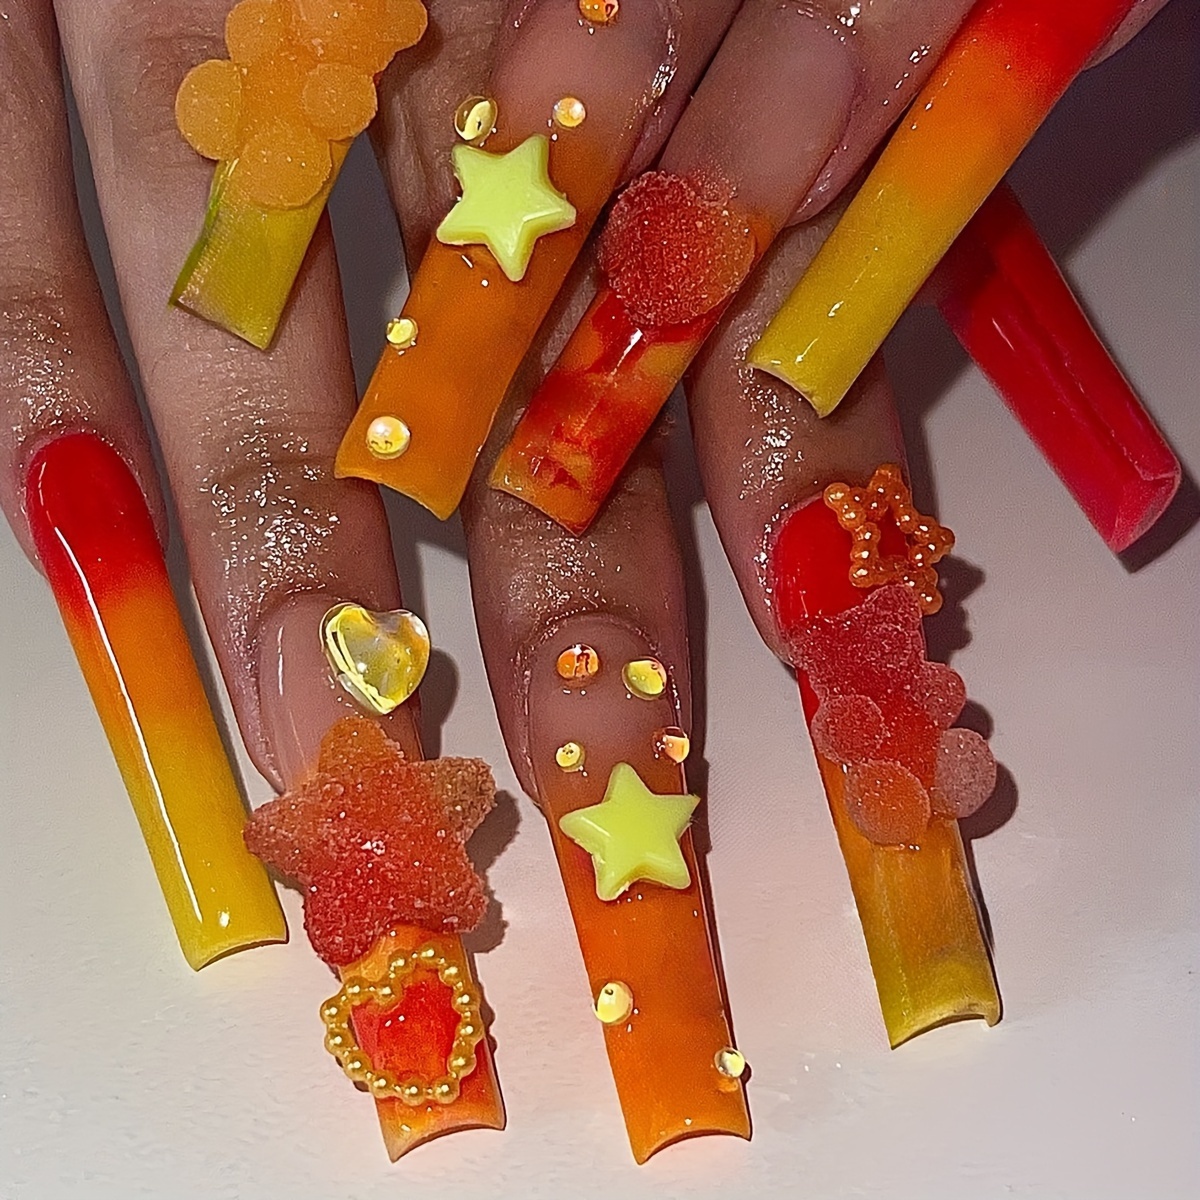 10pcs Cute Sugar Bear Nail Art Charms DIY Candy Color Acrylic